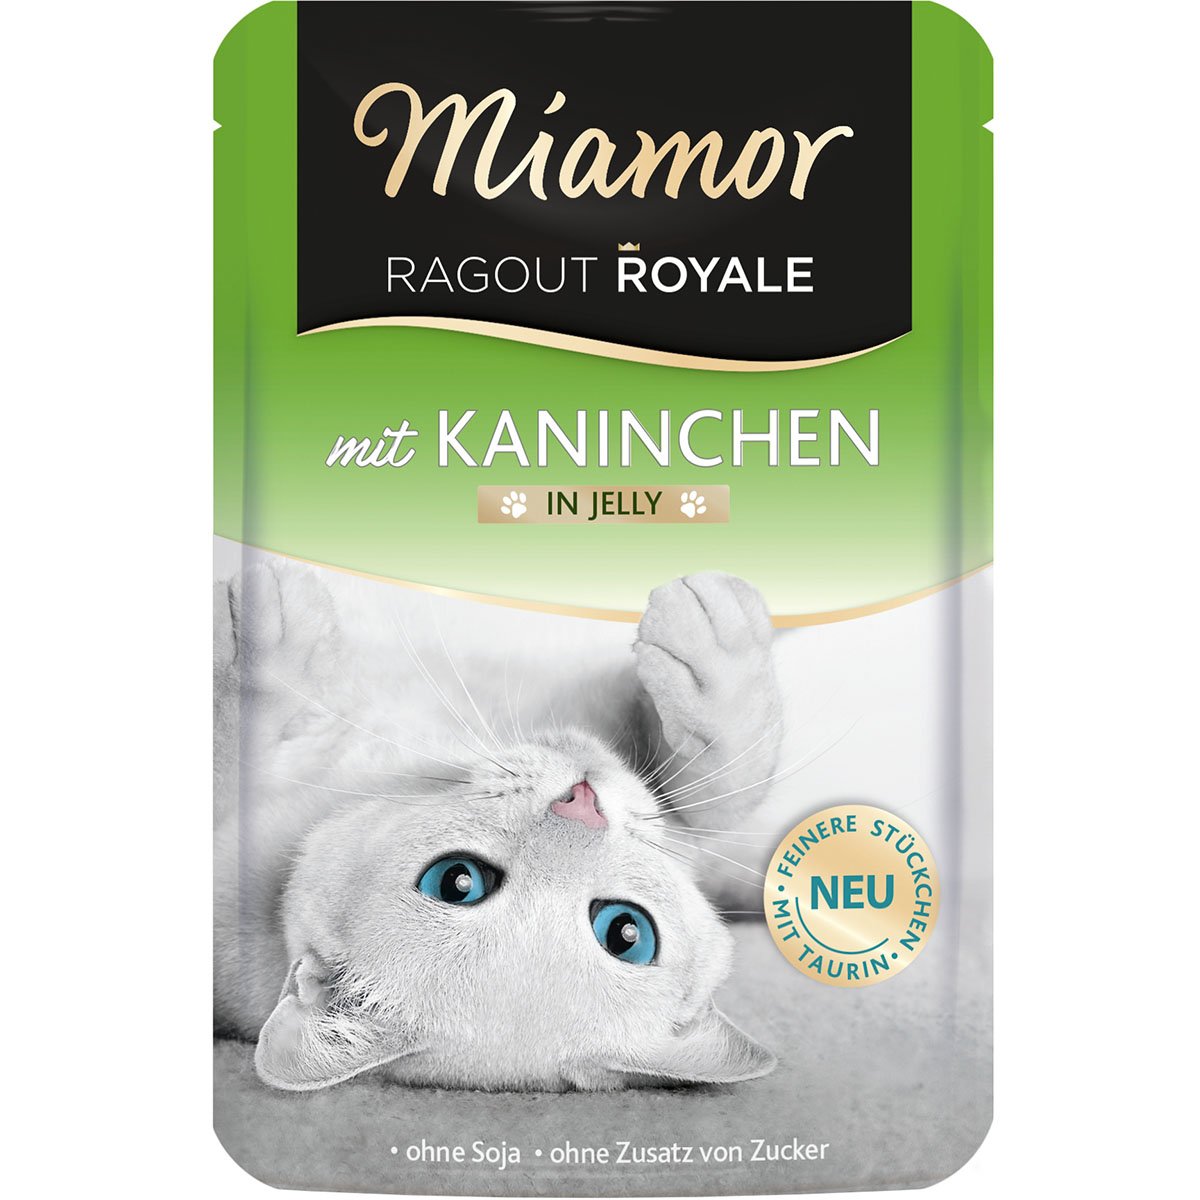 Miamor Ragout Royale Kaninchen in Jelly 22x100g von Miamor